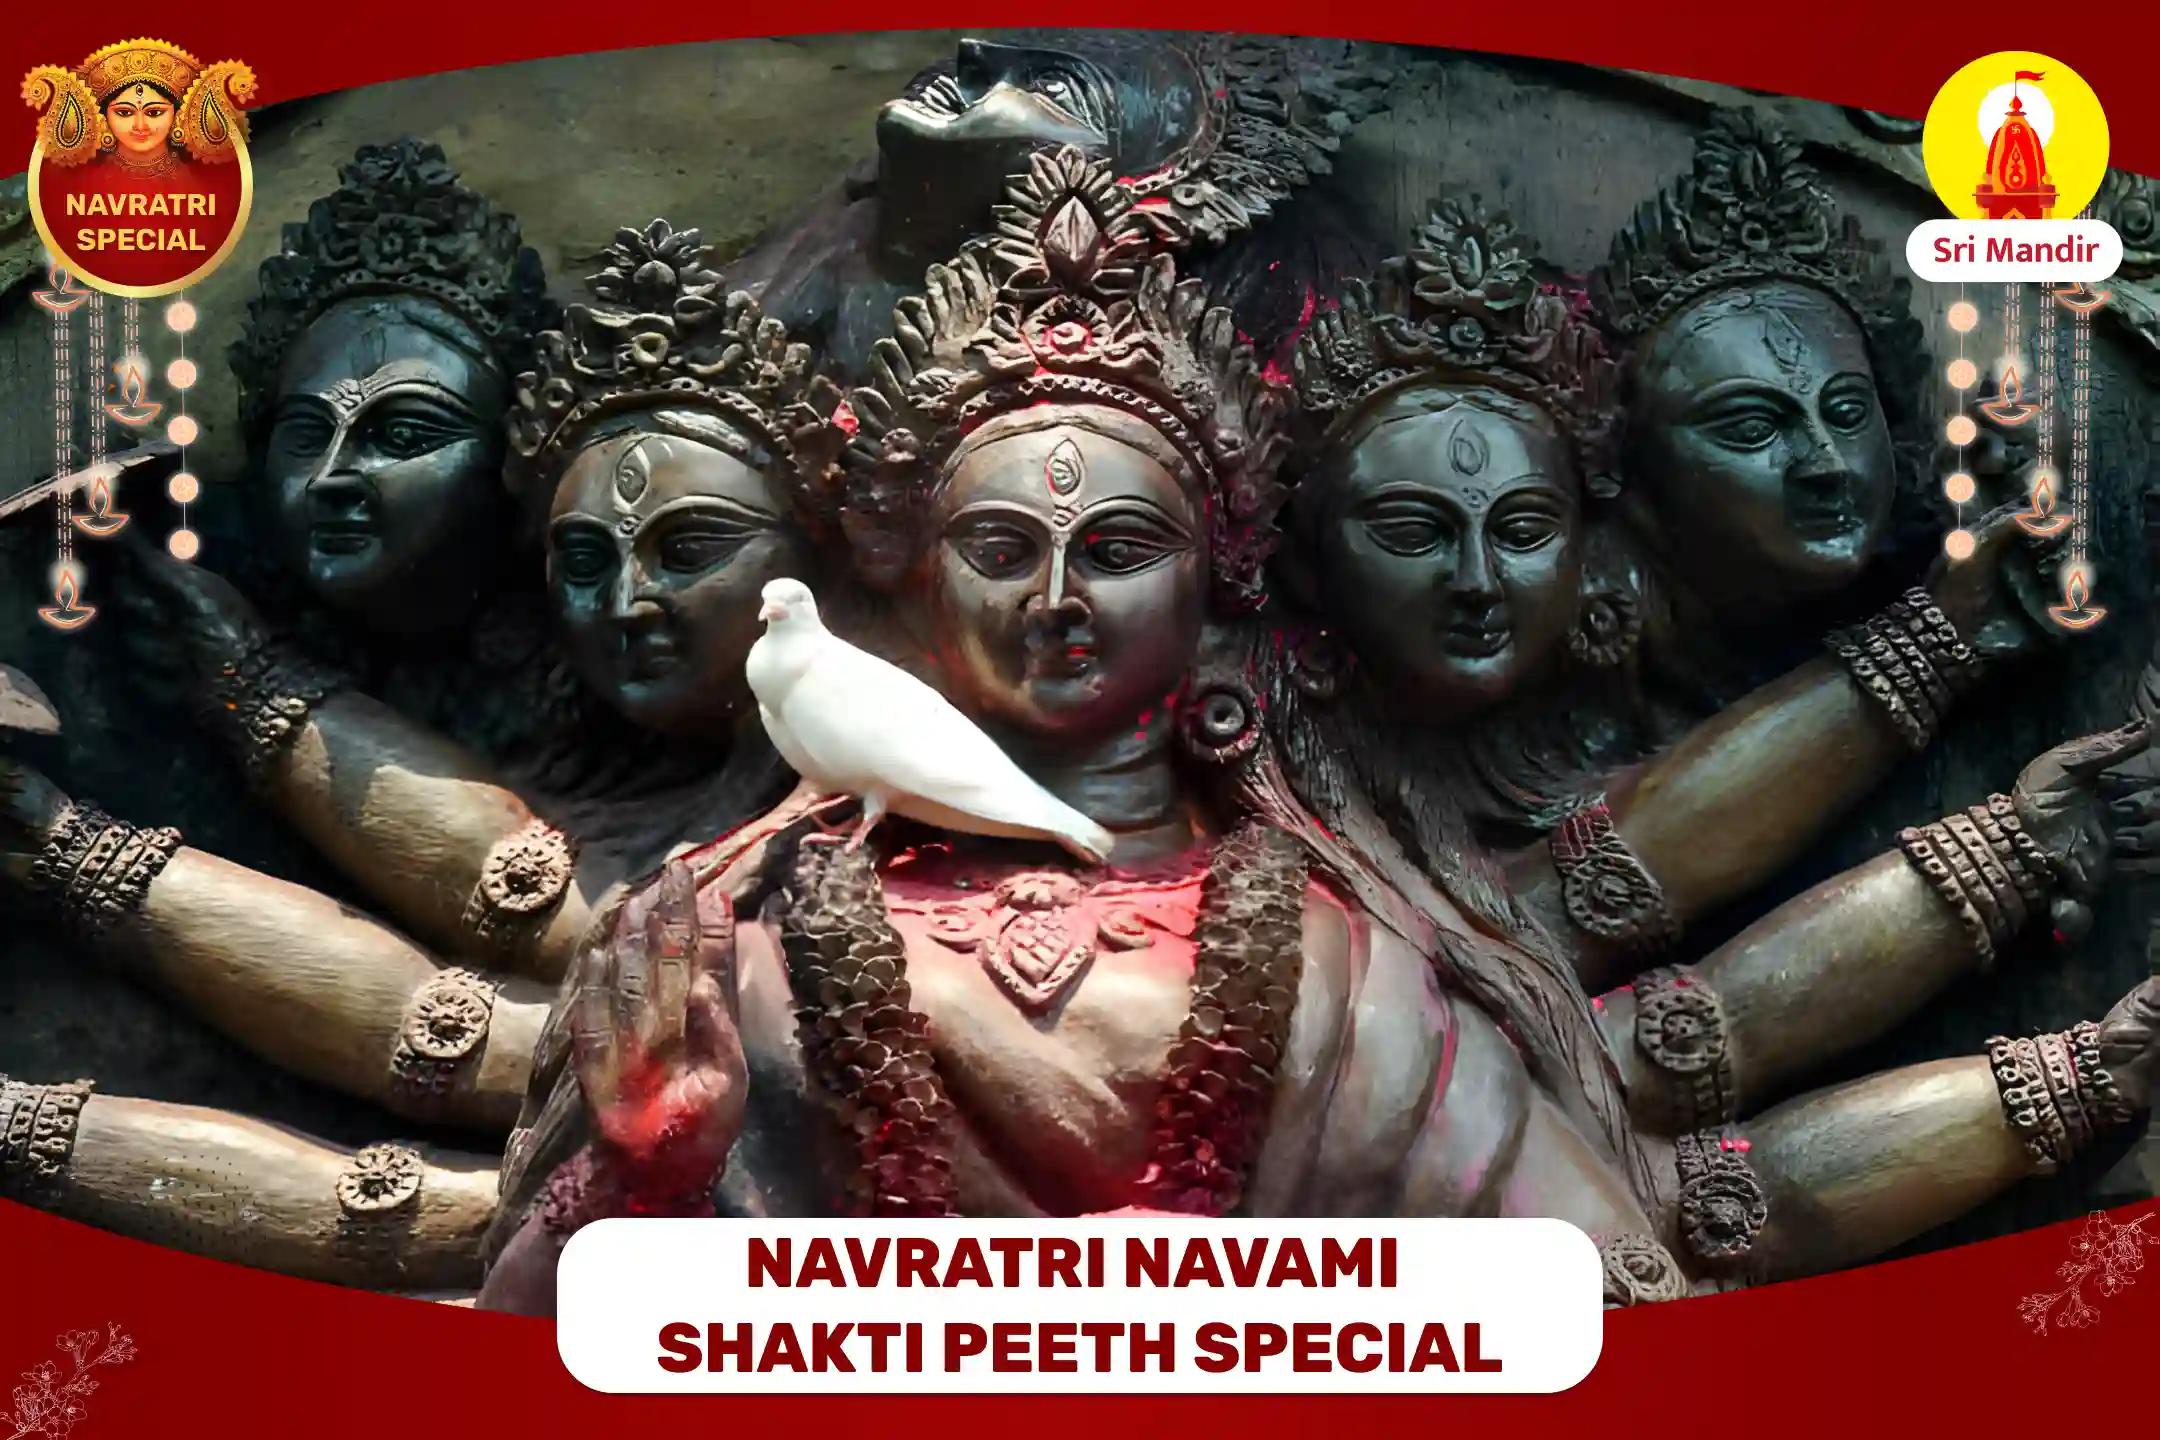 Navratri Navami Shakti Peeth Special Maa Kamakhya Tantrokta Maha Yagya To Achieve Bliss in Relationship and Resolve Conflicts